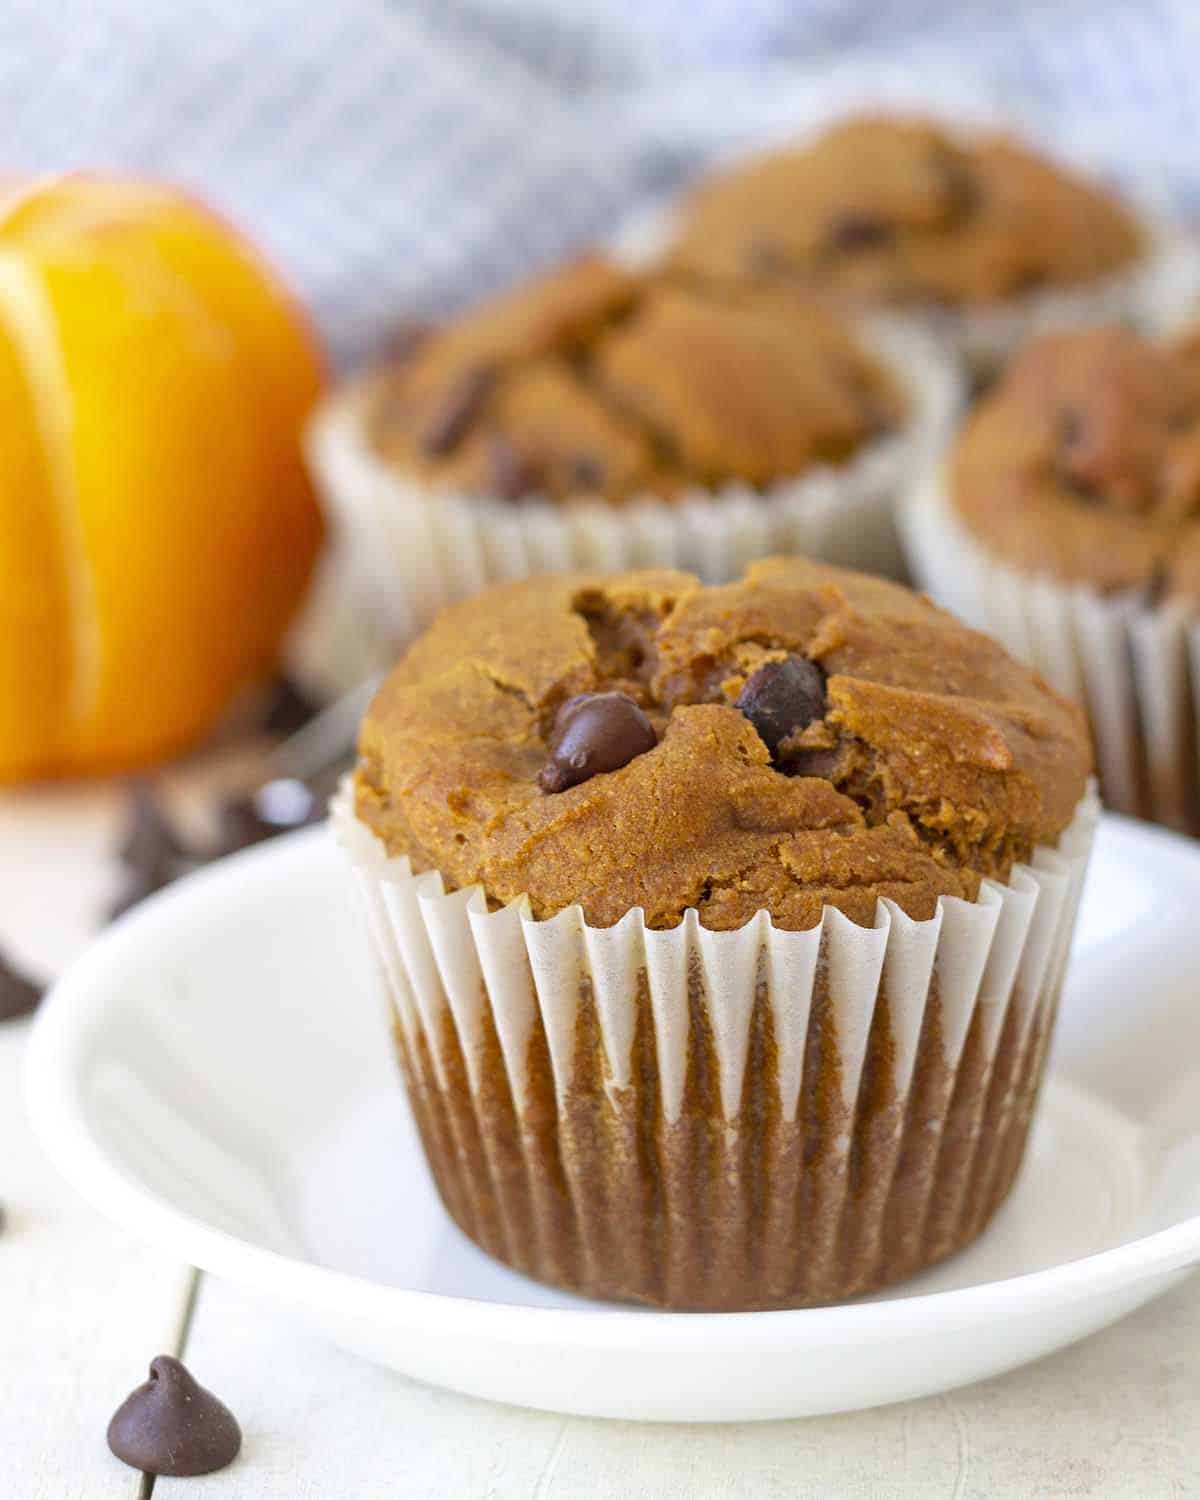 A vegan gluten-free pumpkin muffin on a small white plate.